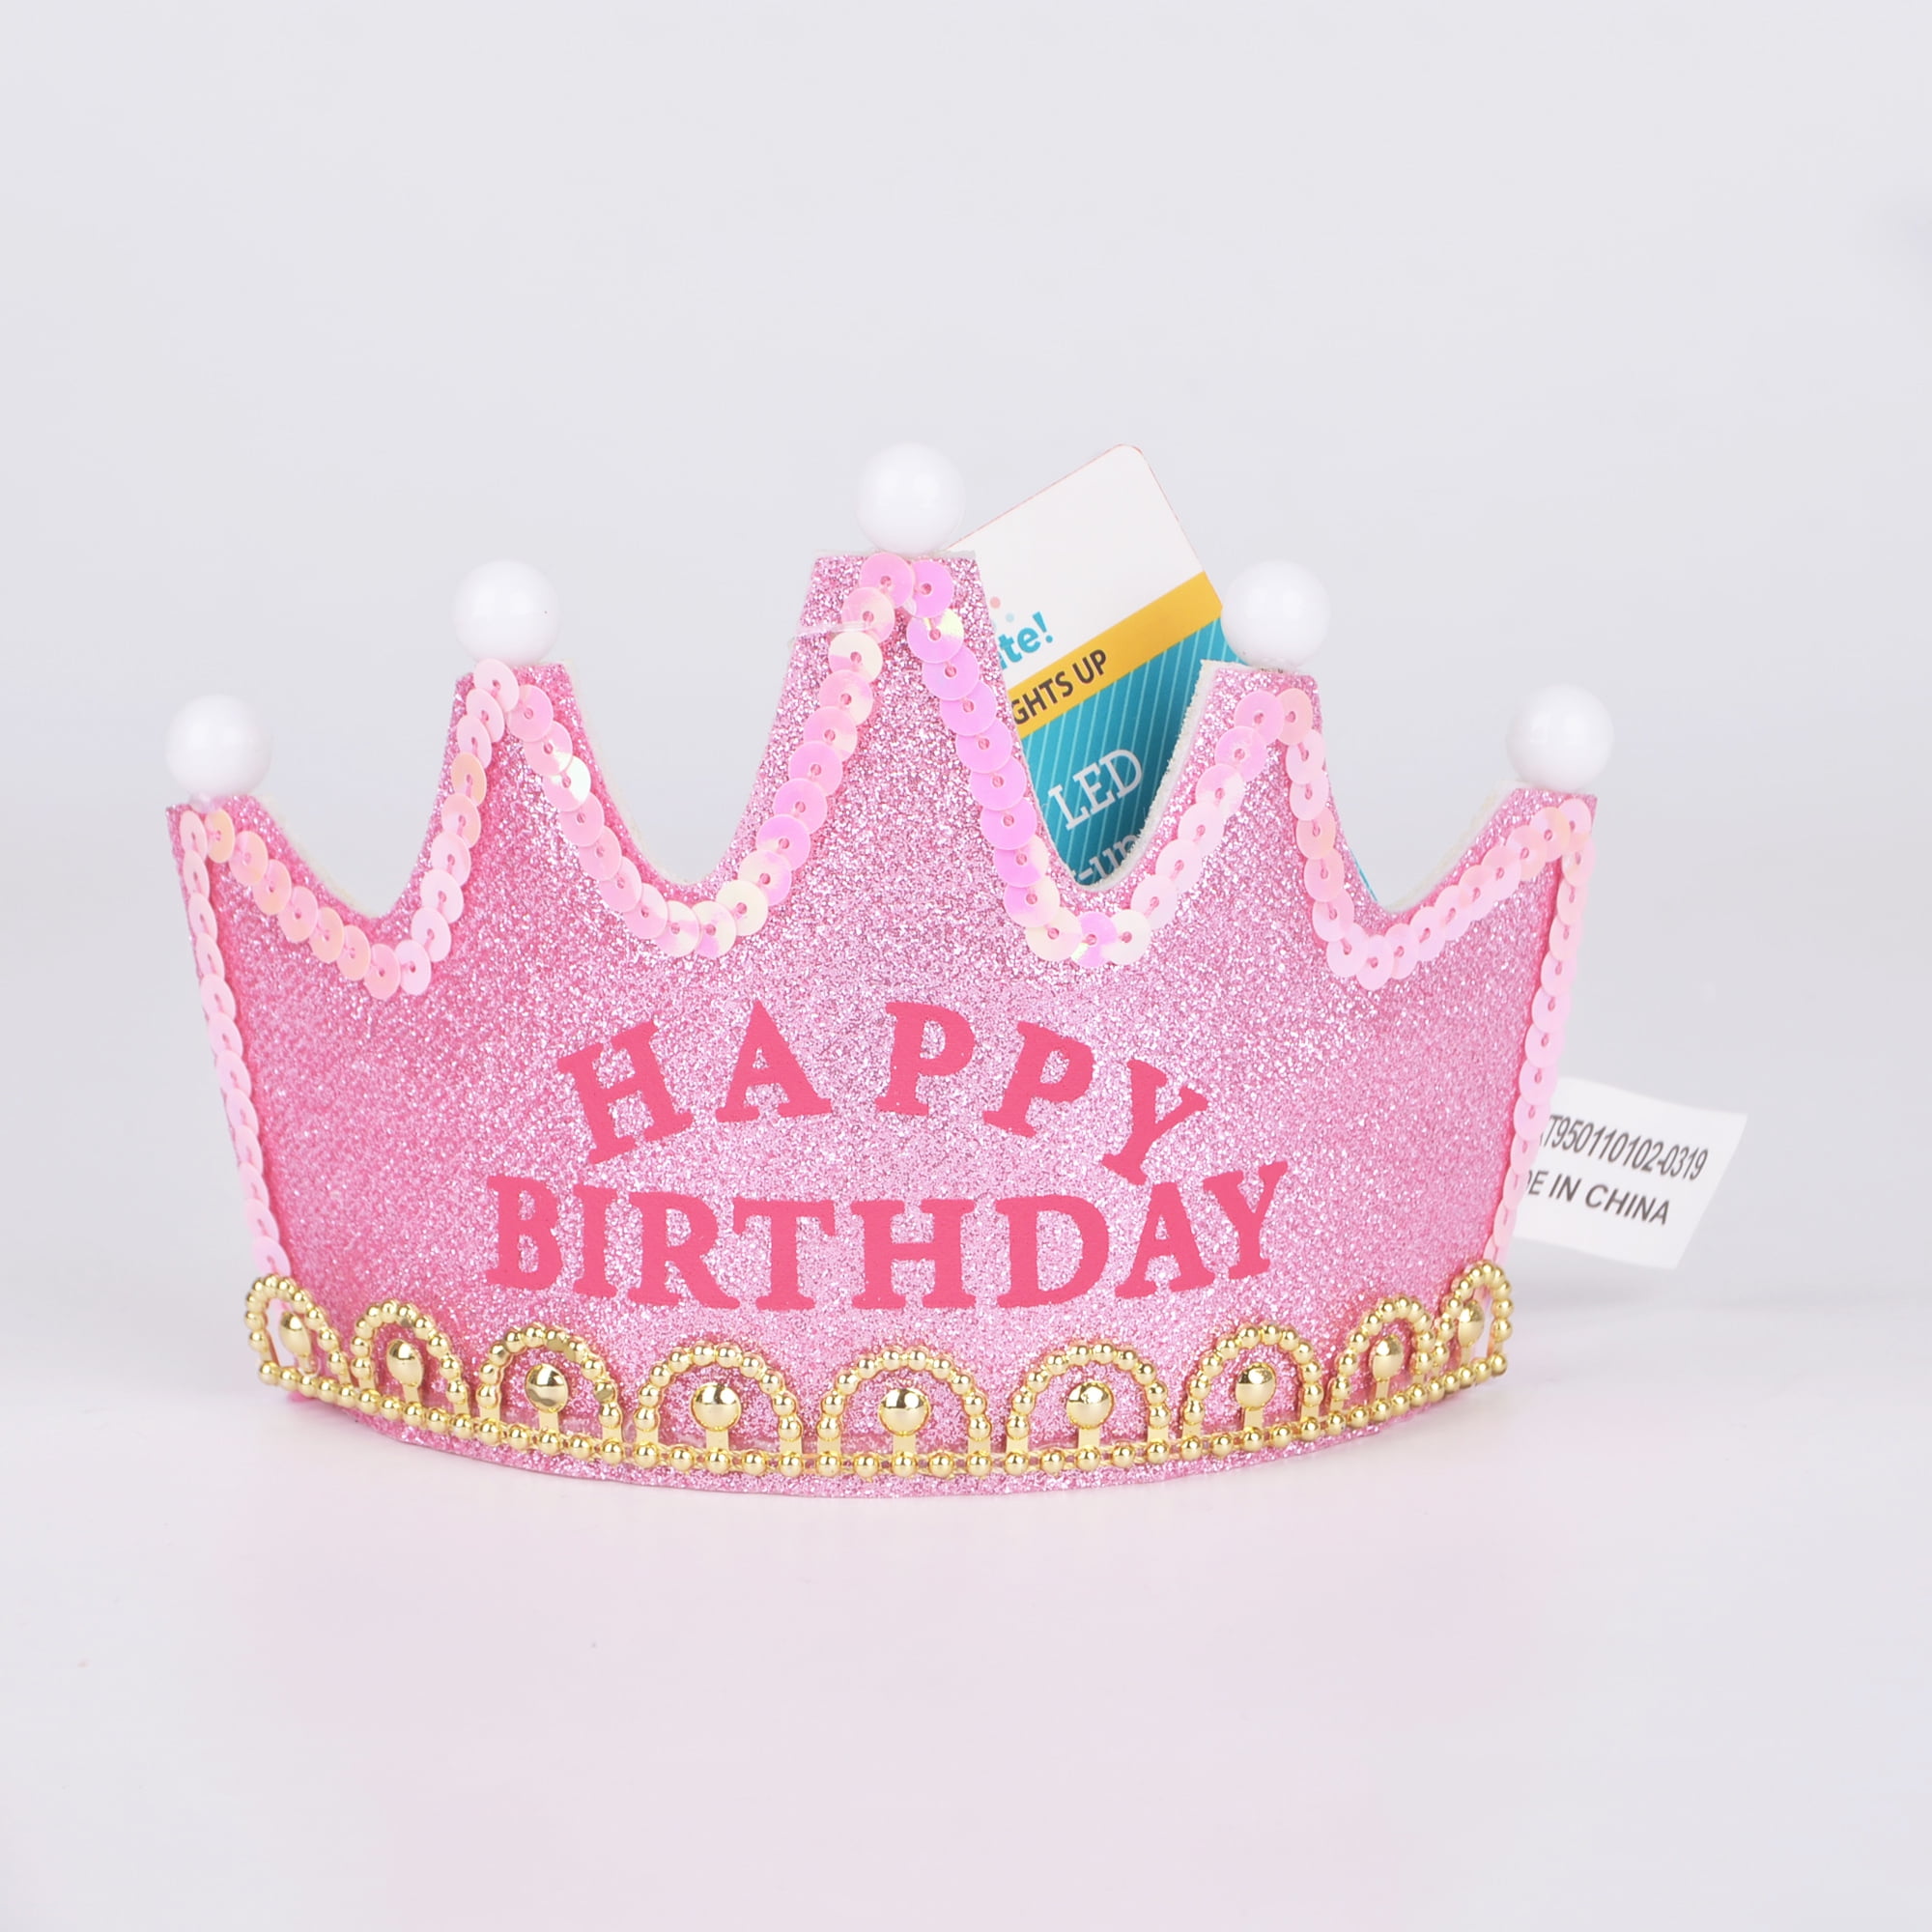 Fun Celebration Kit of 6 LED Light Happy Birthday Crowns Birthday Party Supplies and Birthday Decorations Birthday Party Crowns